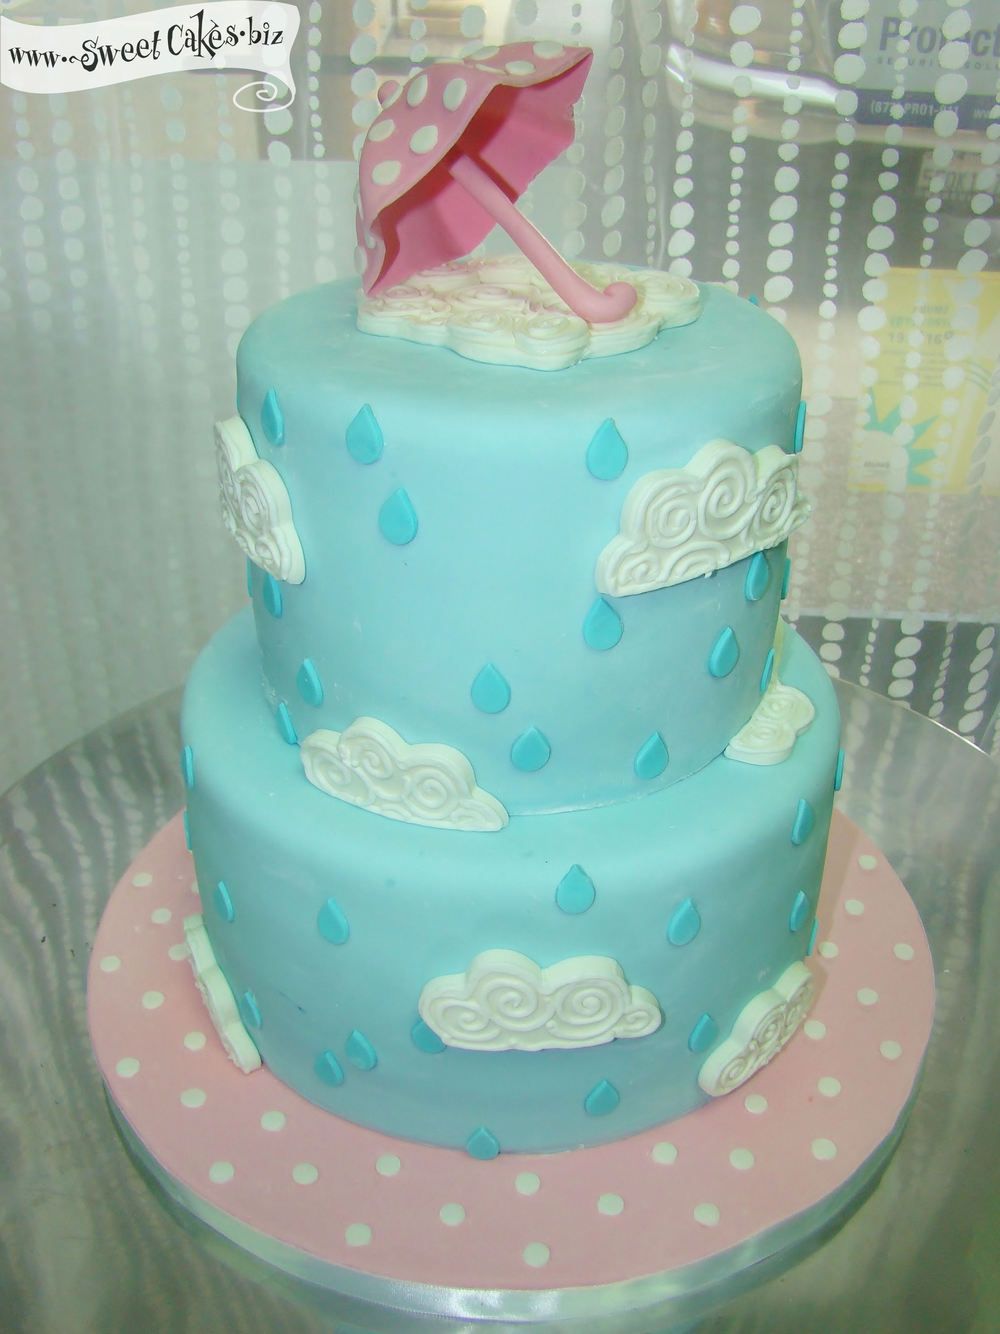 Decorated Rain Cake